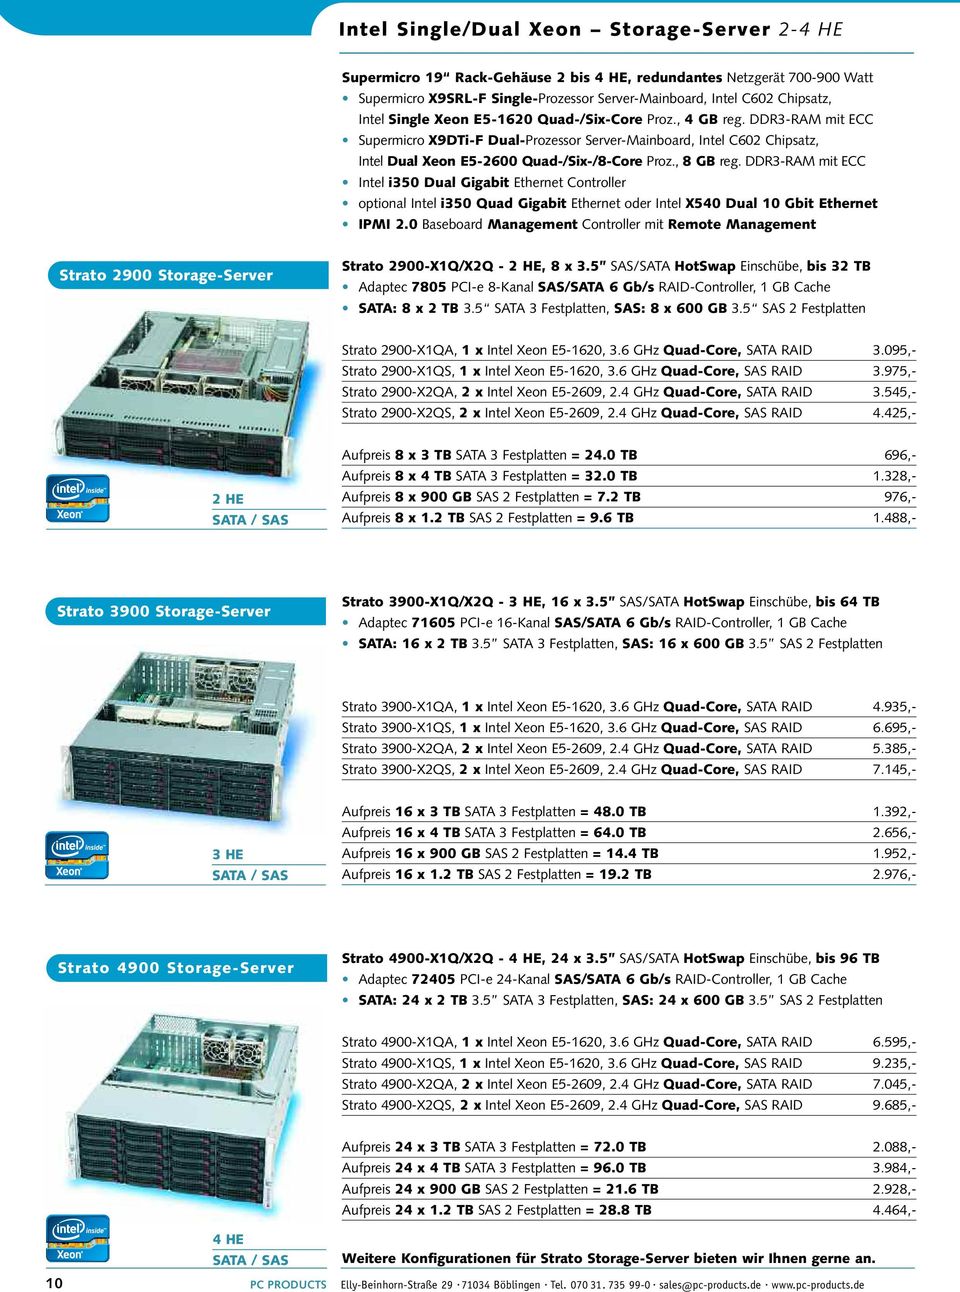 DDR3-RAM mit ECC Intel i350 Dual Gigabit Ethernet Controller optional Intel i350 Quad Gigabit Ethernet oder Intel X540 Dual 10 Gbit Ethernet IPMI 2.